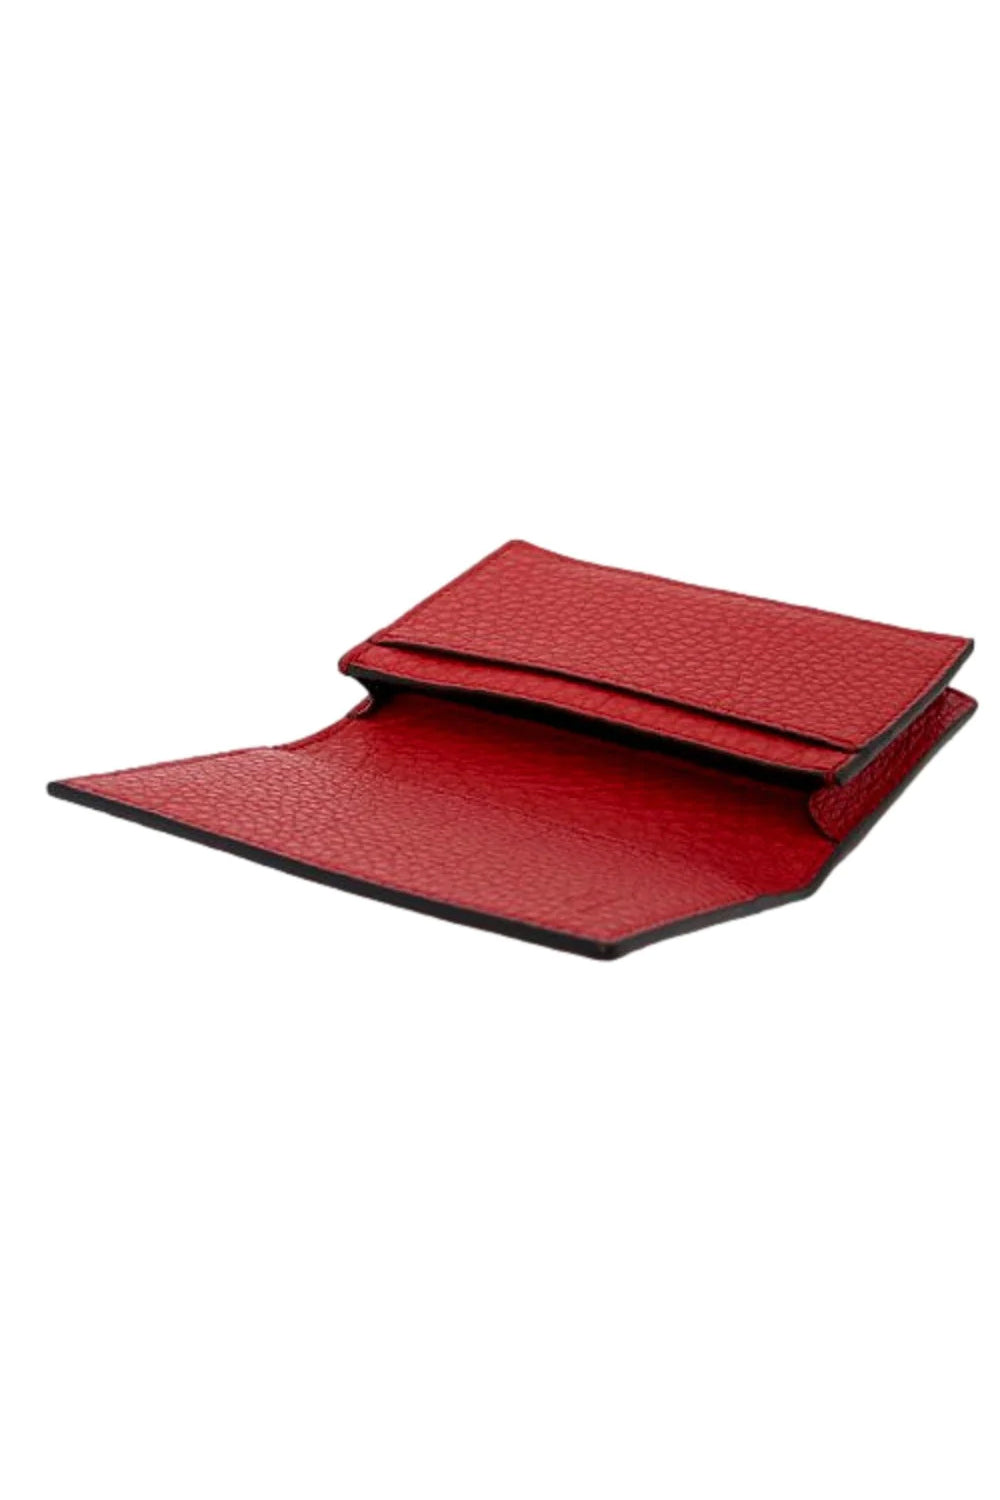 Fendi Red Grained Leather Baguette Logo Card Case Wallet